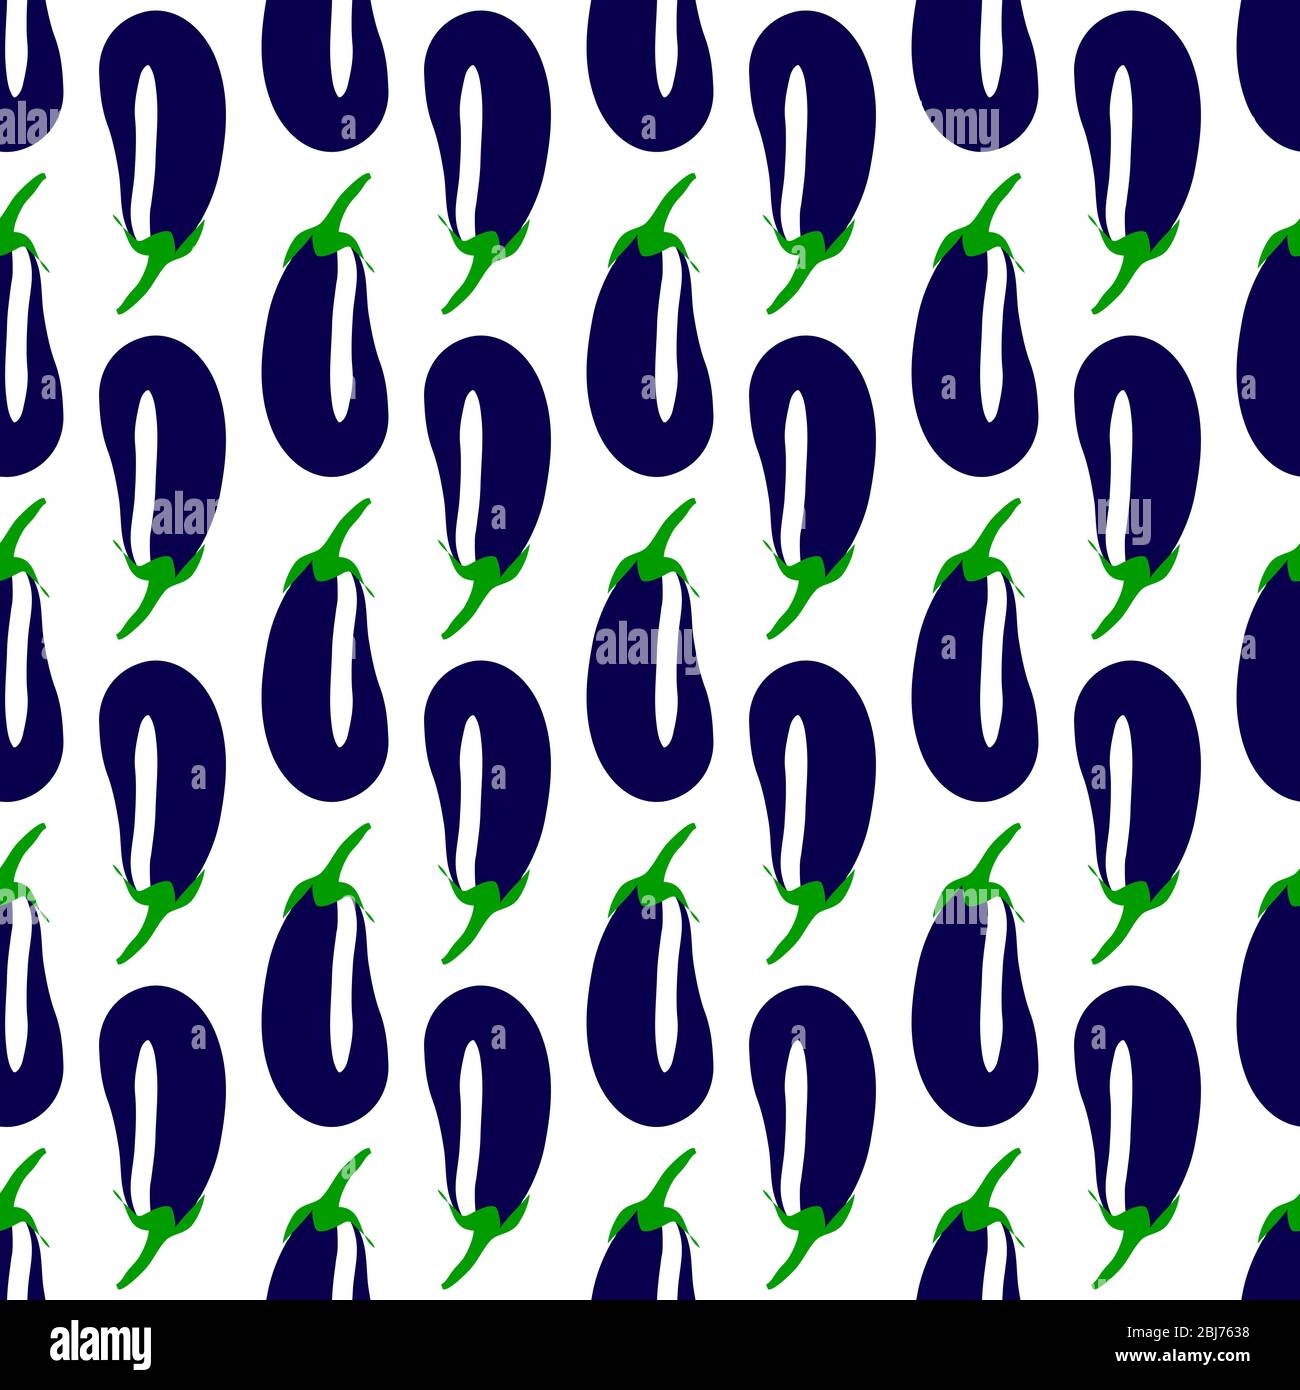 Eggplant Peaches Pattern Wallpaper Stock Illustration 1912259947